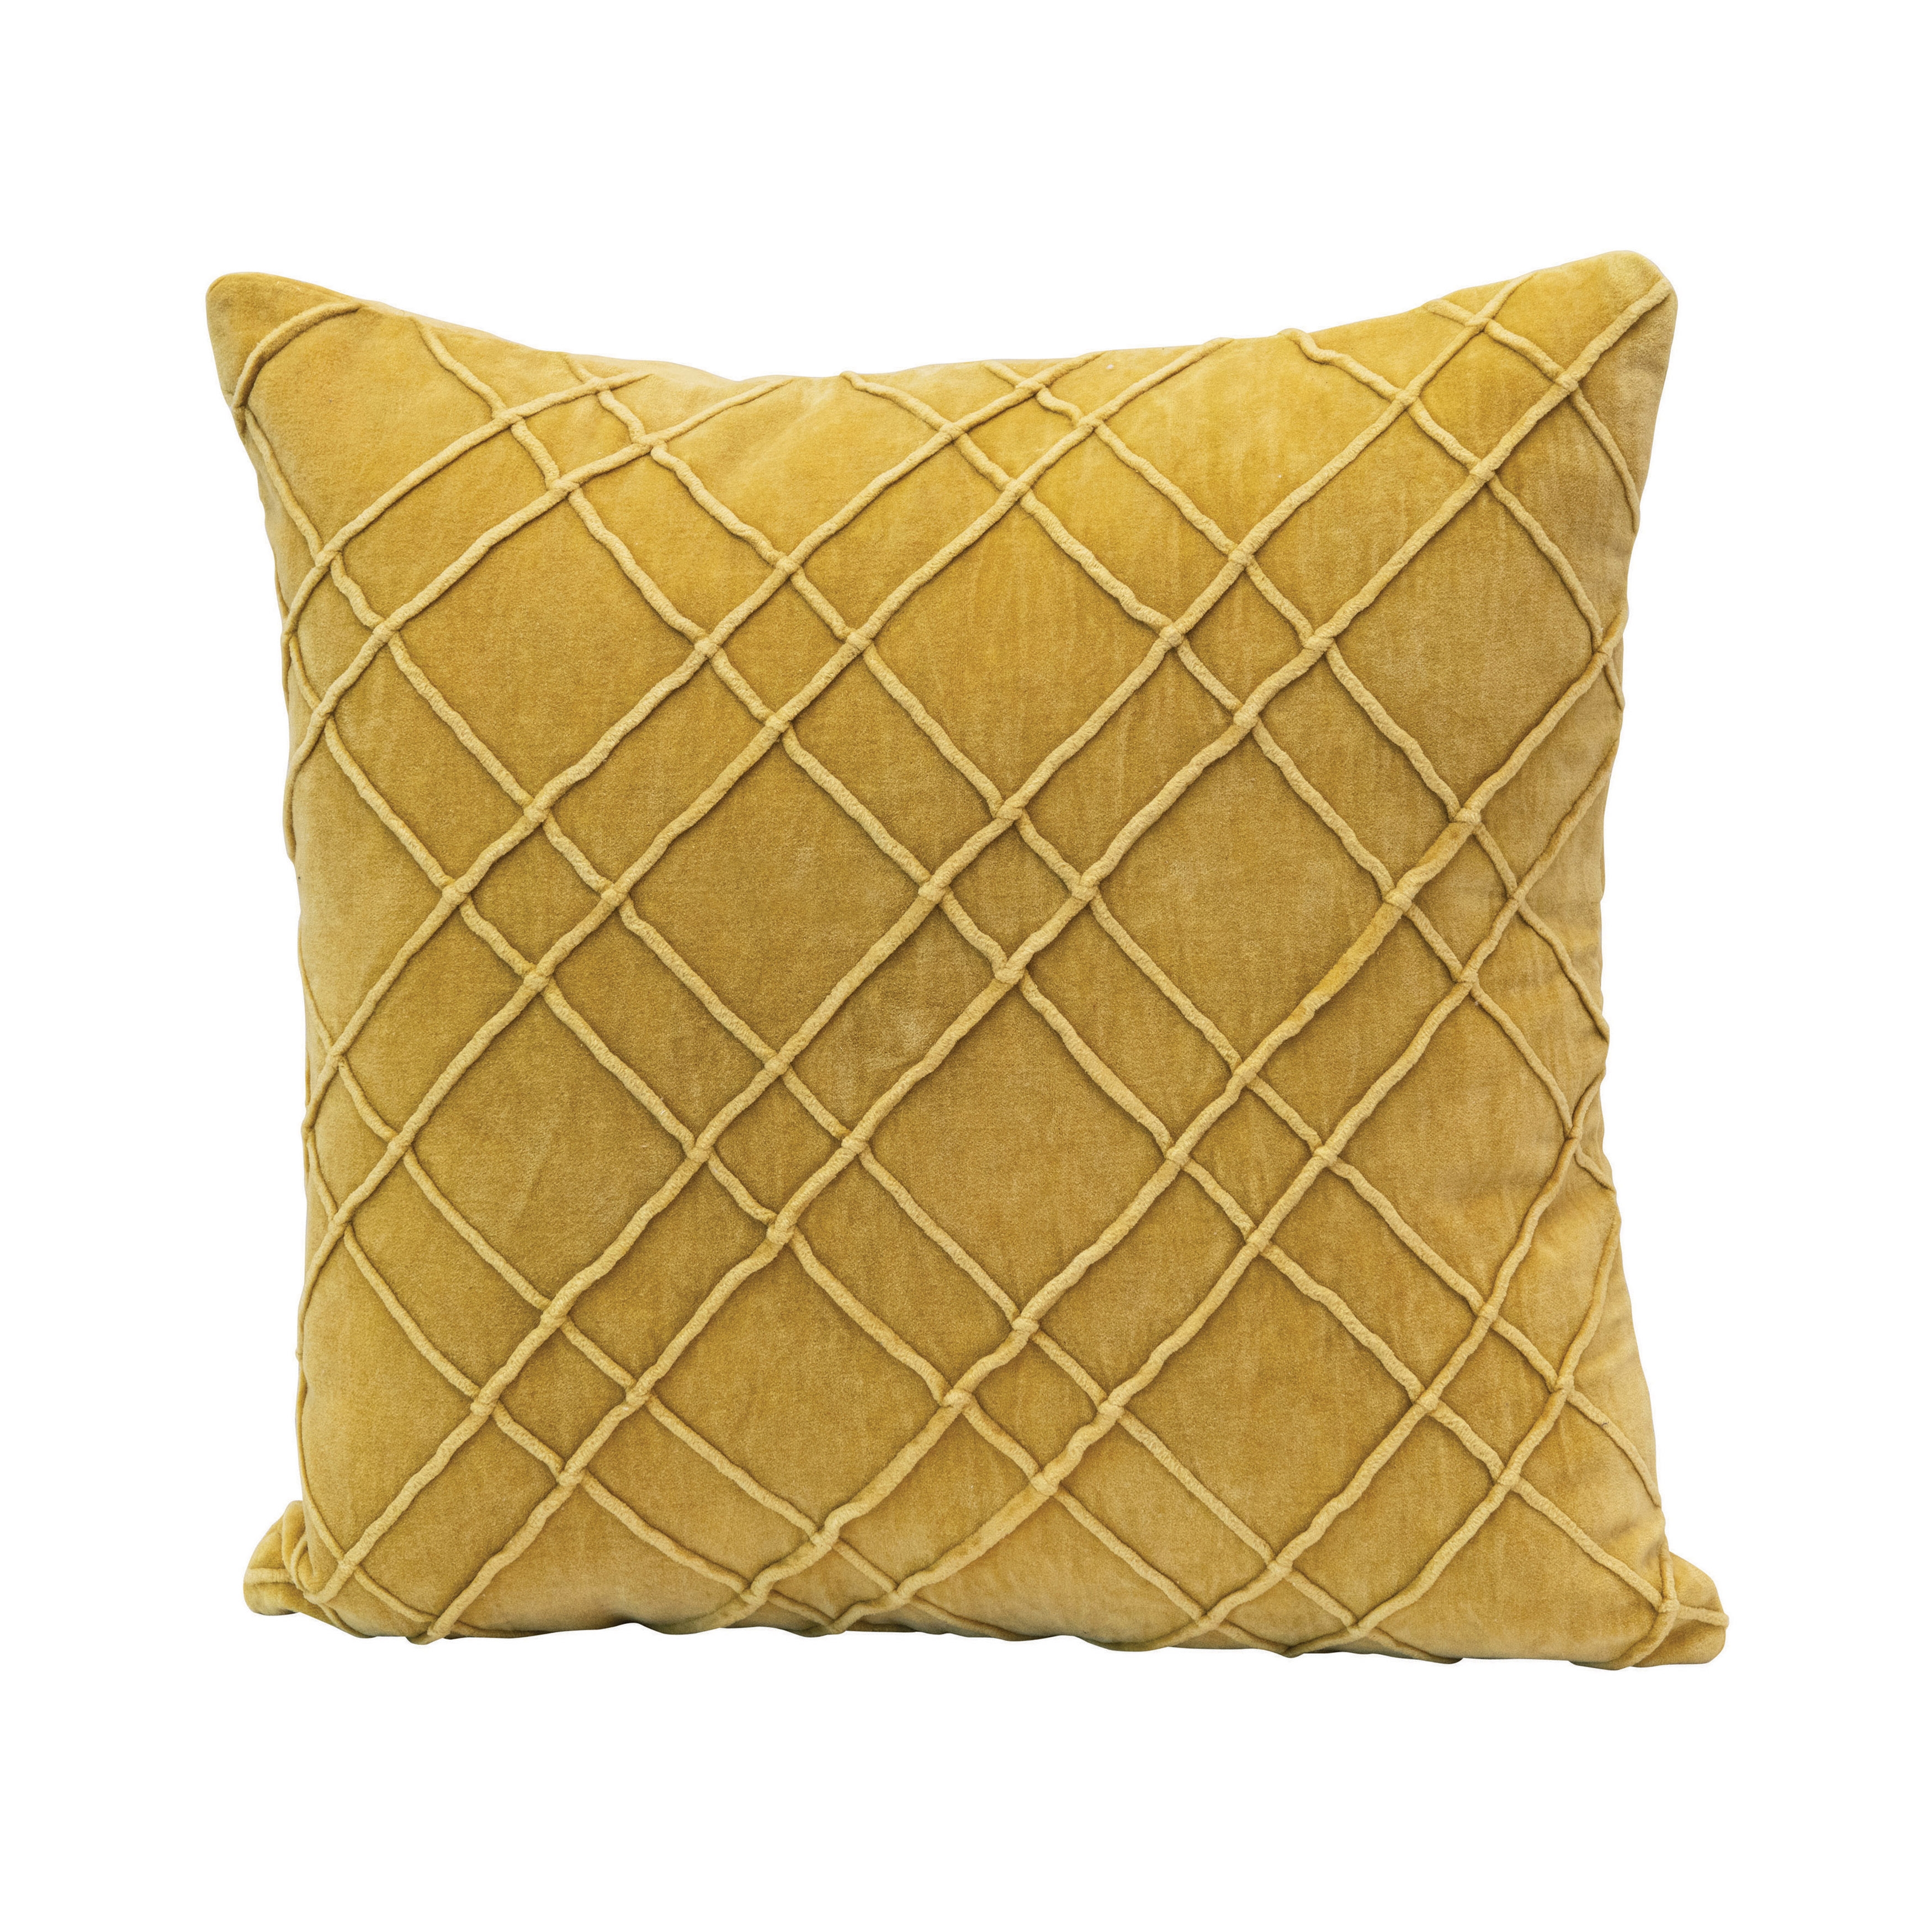 Cotton Velvet Pillow, Mustard Color - Image 0